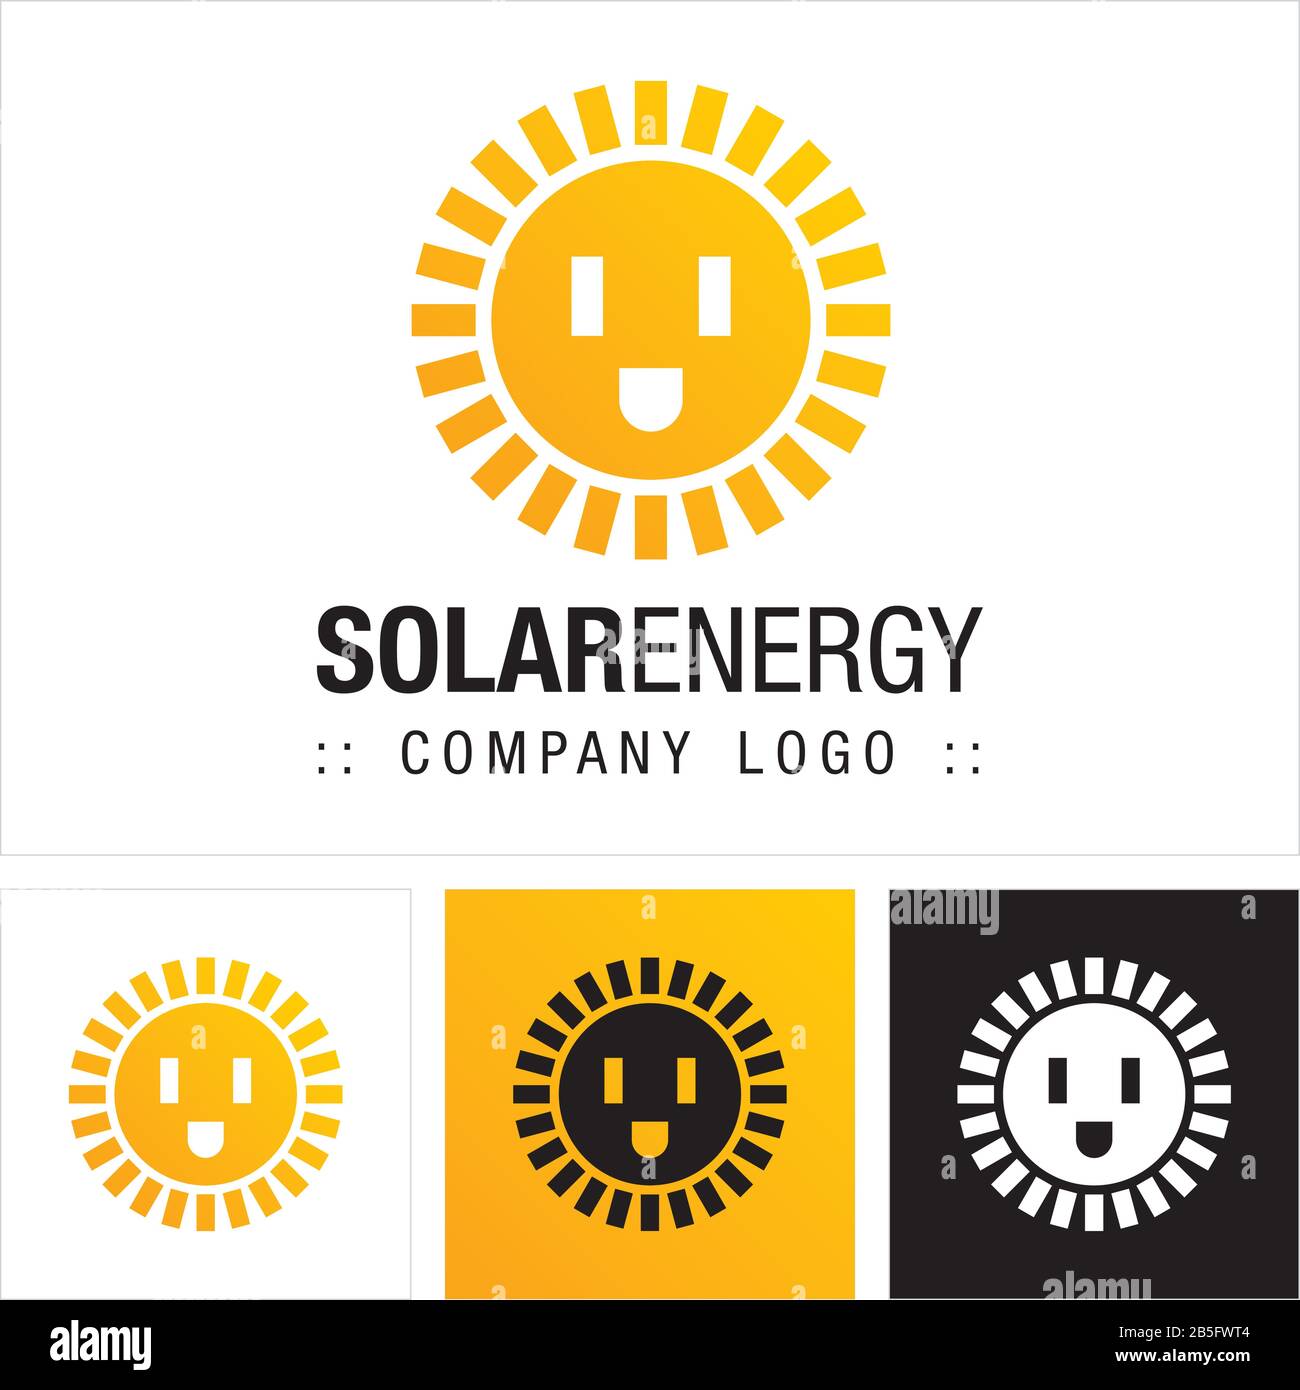 Solar Energy Vector Symbol Company Logo. Cartoon Style Logotype. Sun, Electric Plug and Smile Icon illustration (Emoticon). Elegant Identity Concept Stock Vector